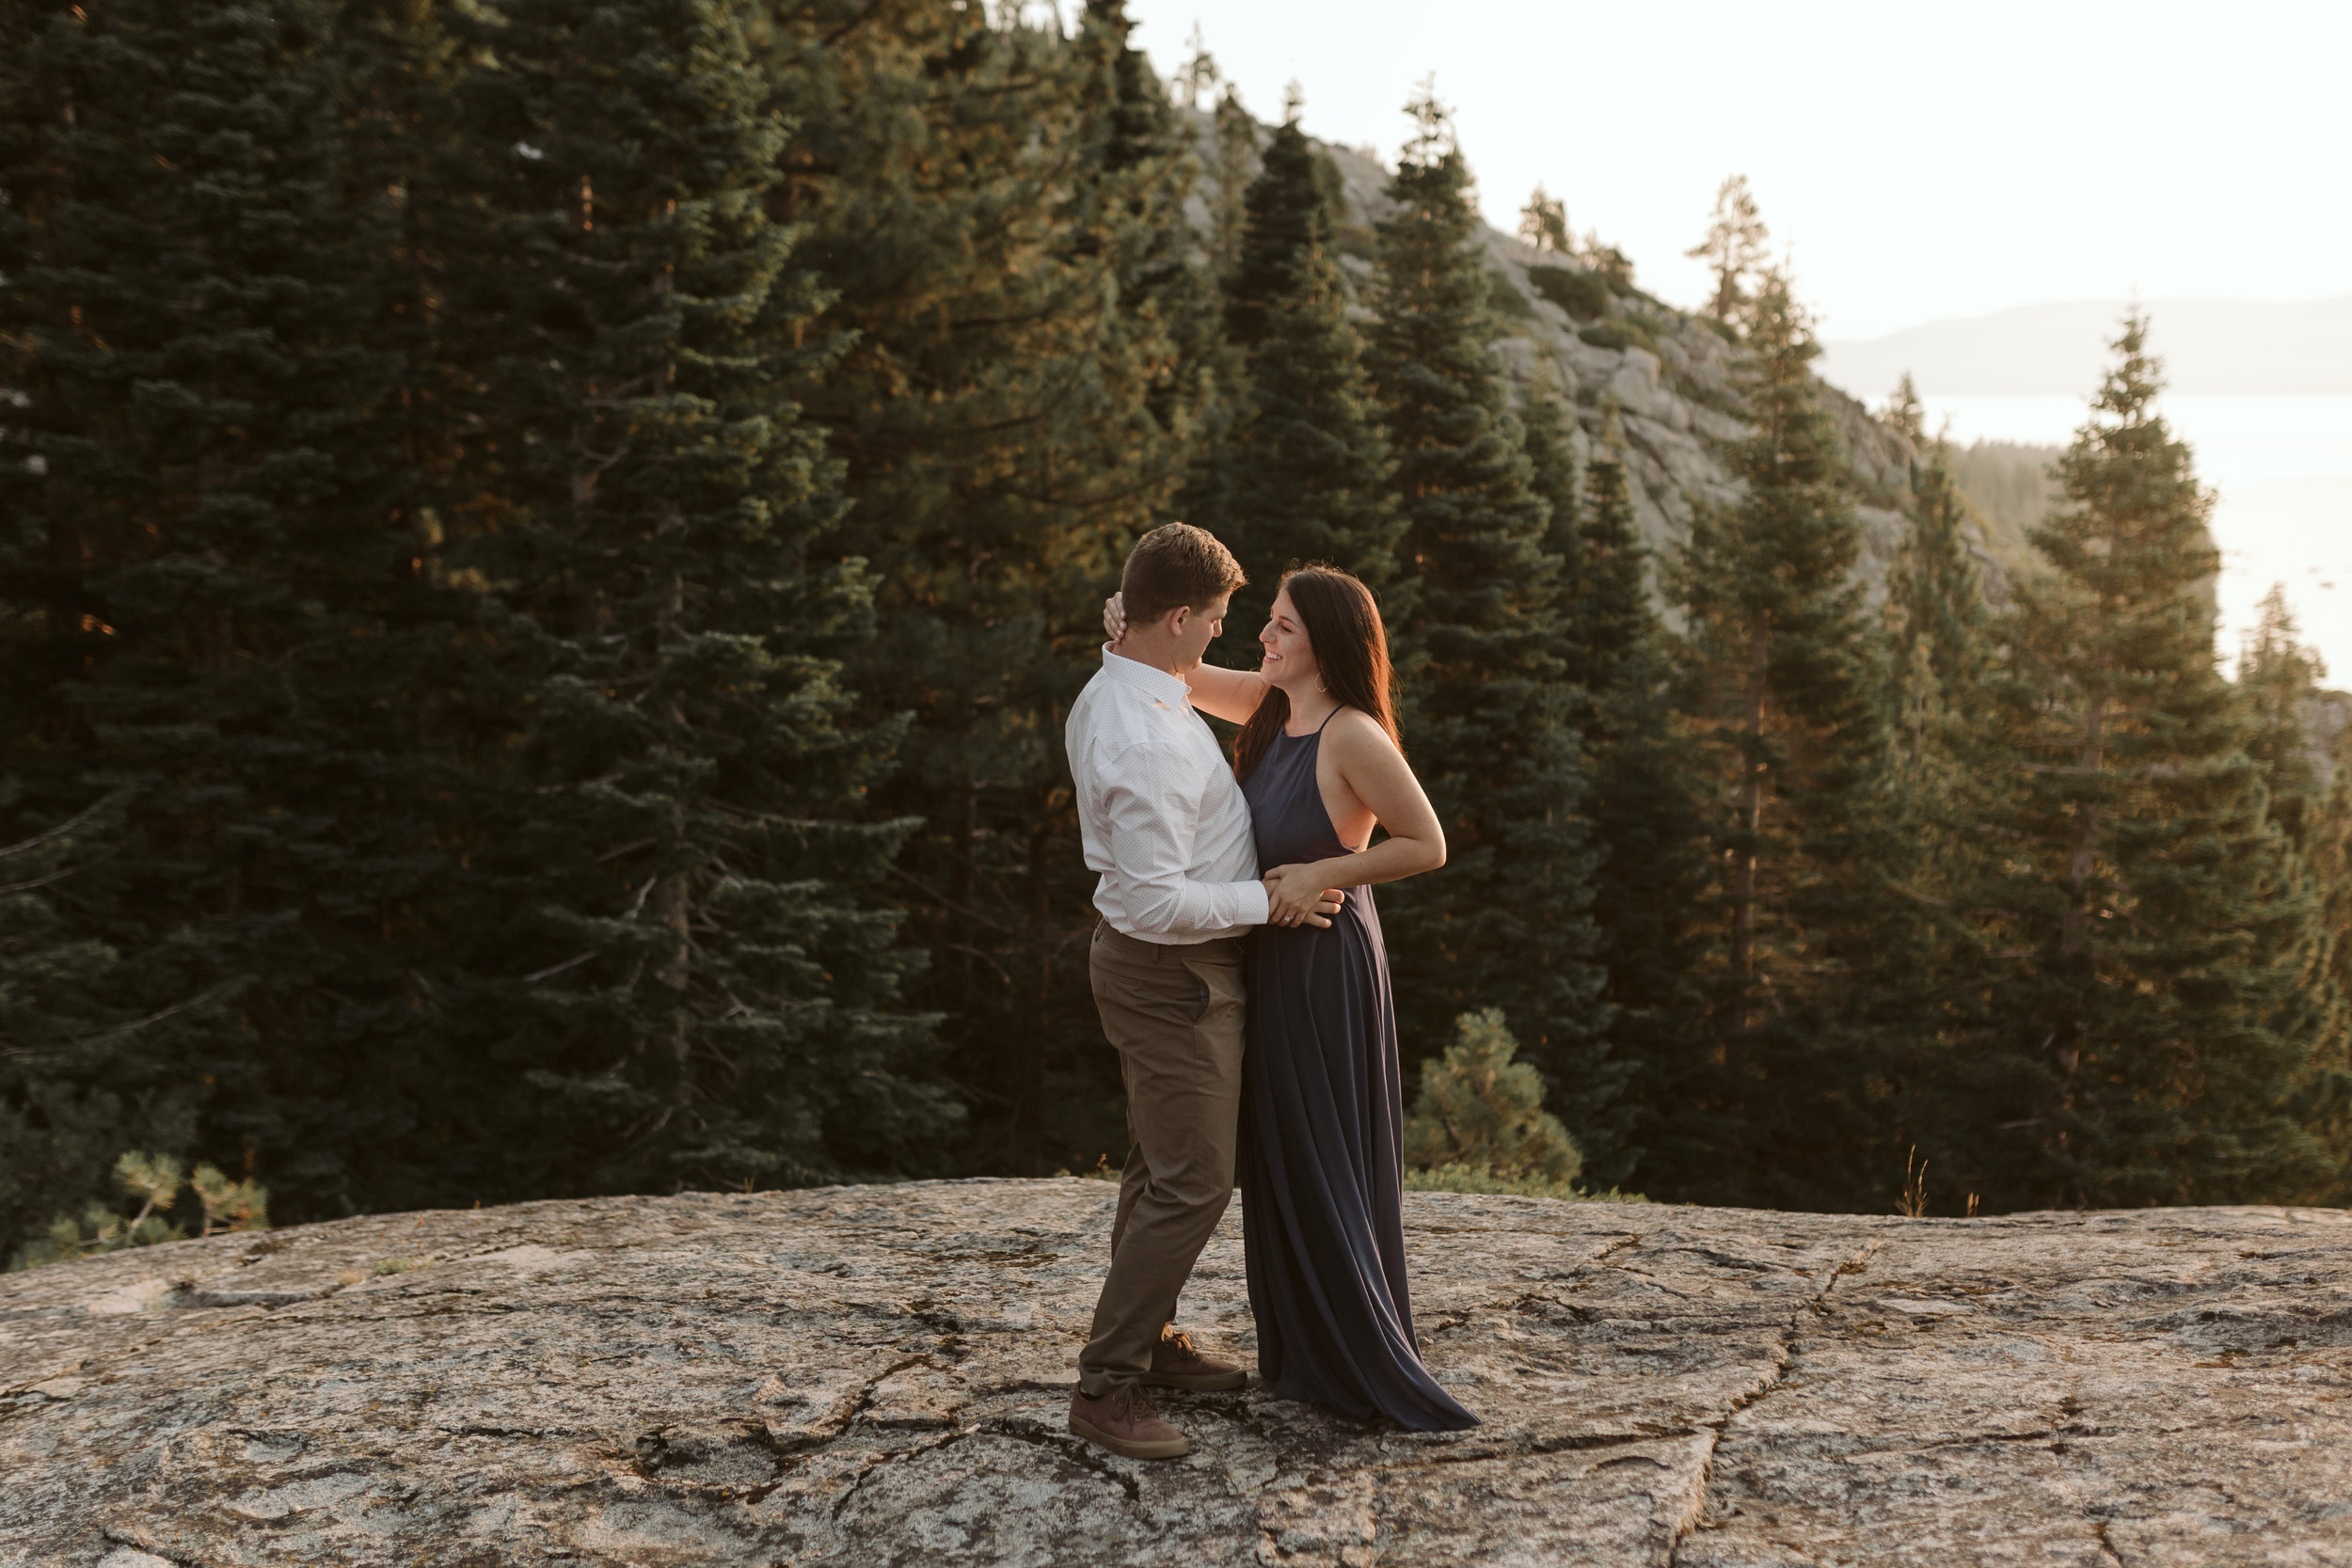 nicole-daacke-photography-lake-tahoe-sunrise-summer-adventure-engagement-photos-nevada-wedding-elopement-photographer-golden-emerald-bay-light-pine-trees-summer-vibe-fun-carefree-authentic-love-26.jpg